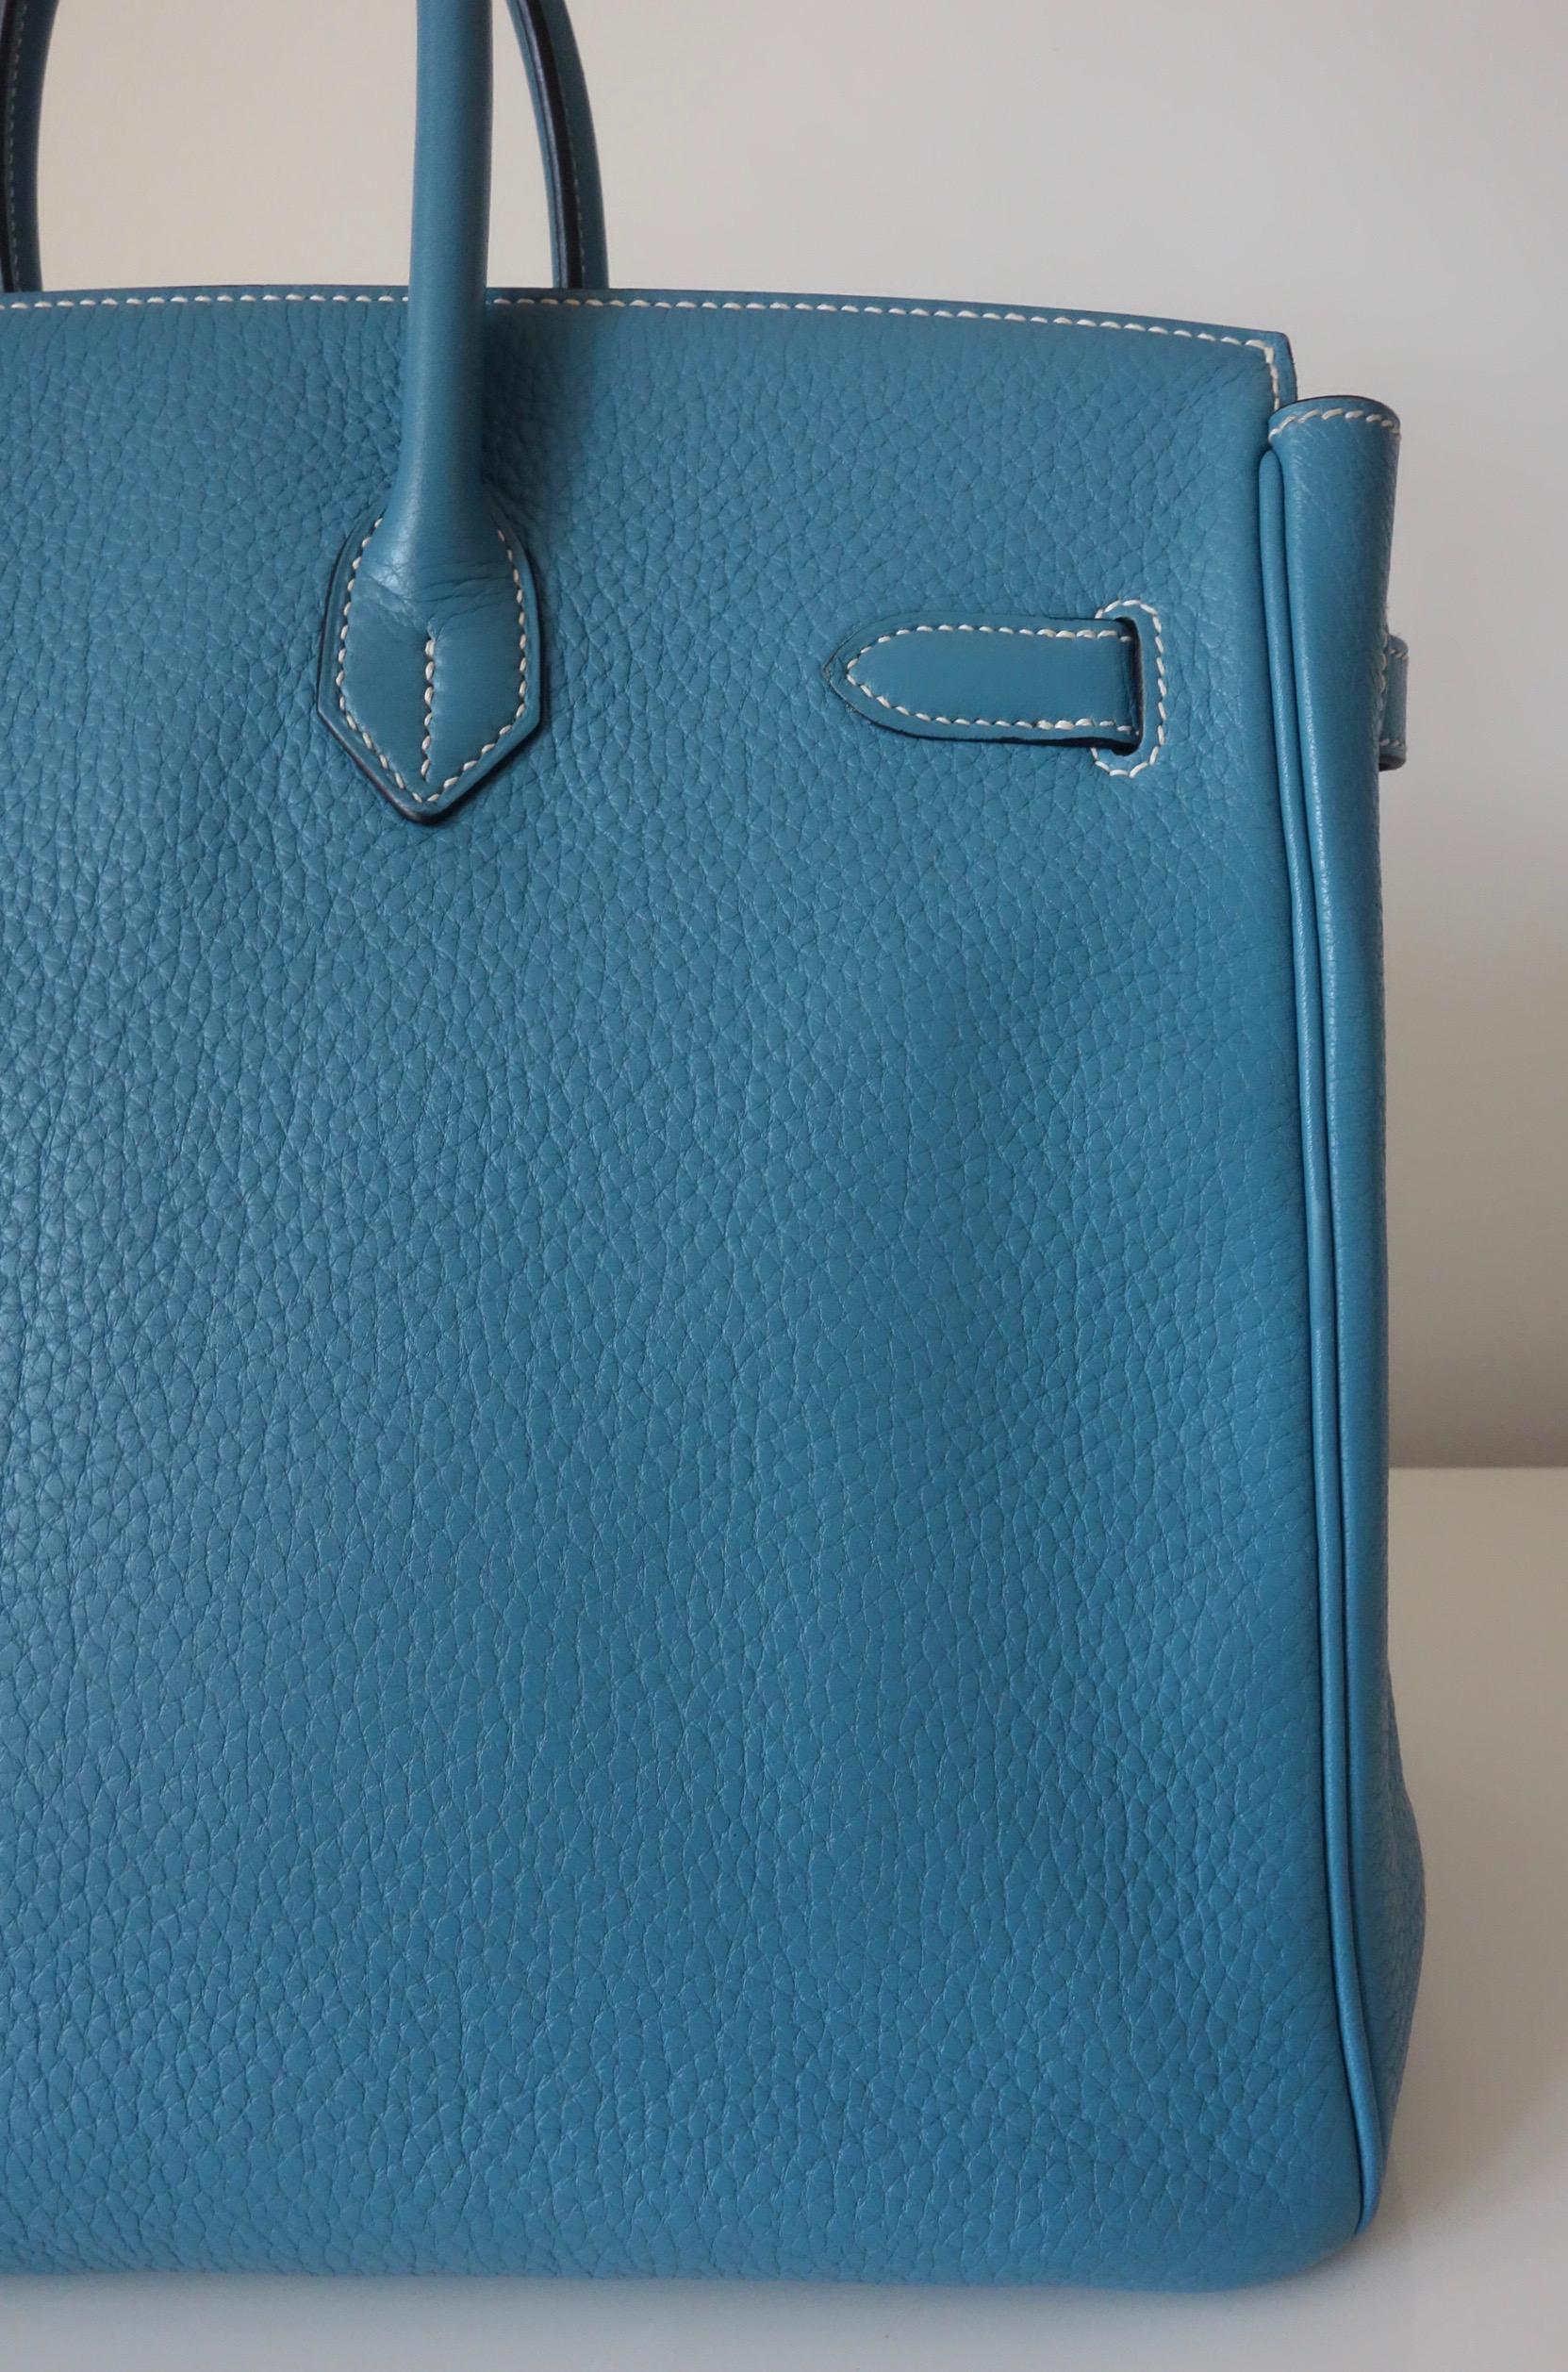 Hermès Taurillon Clemence Bleu Jean PHW 35 cm Birkin Top Handle Bag 2